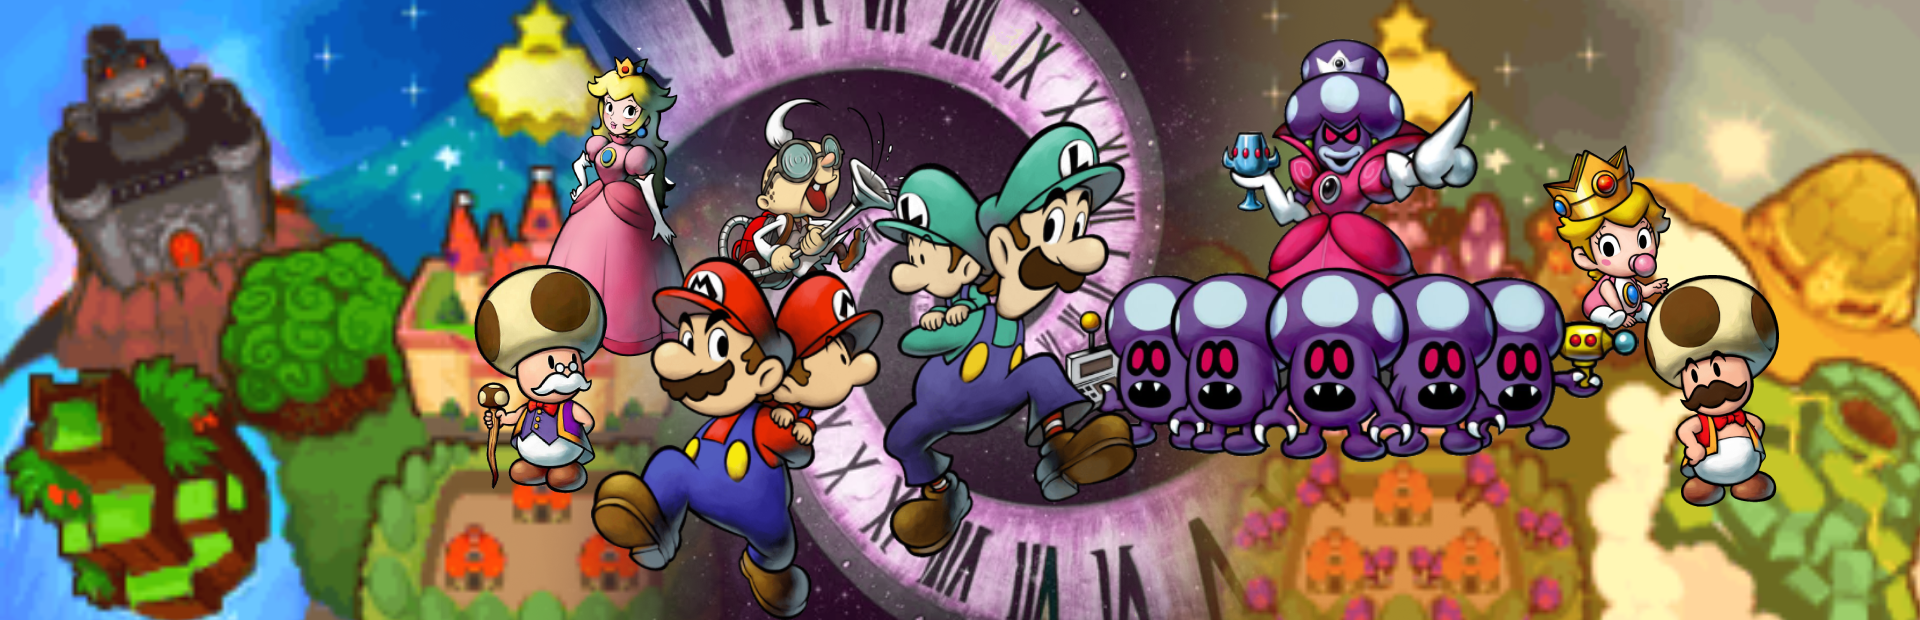 Mario & Luigi: Partners in Time - Desciclopédia